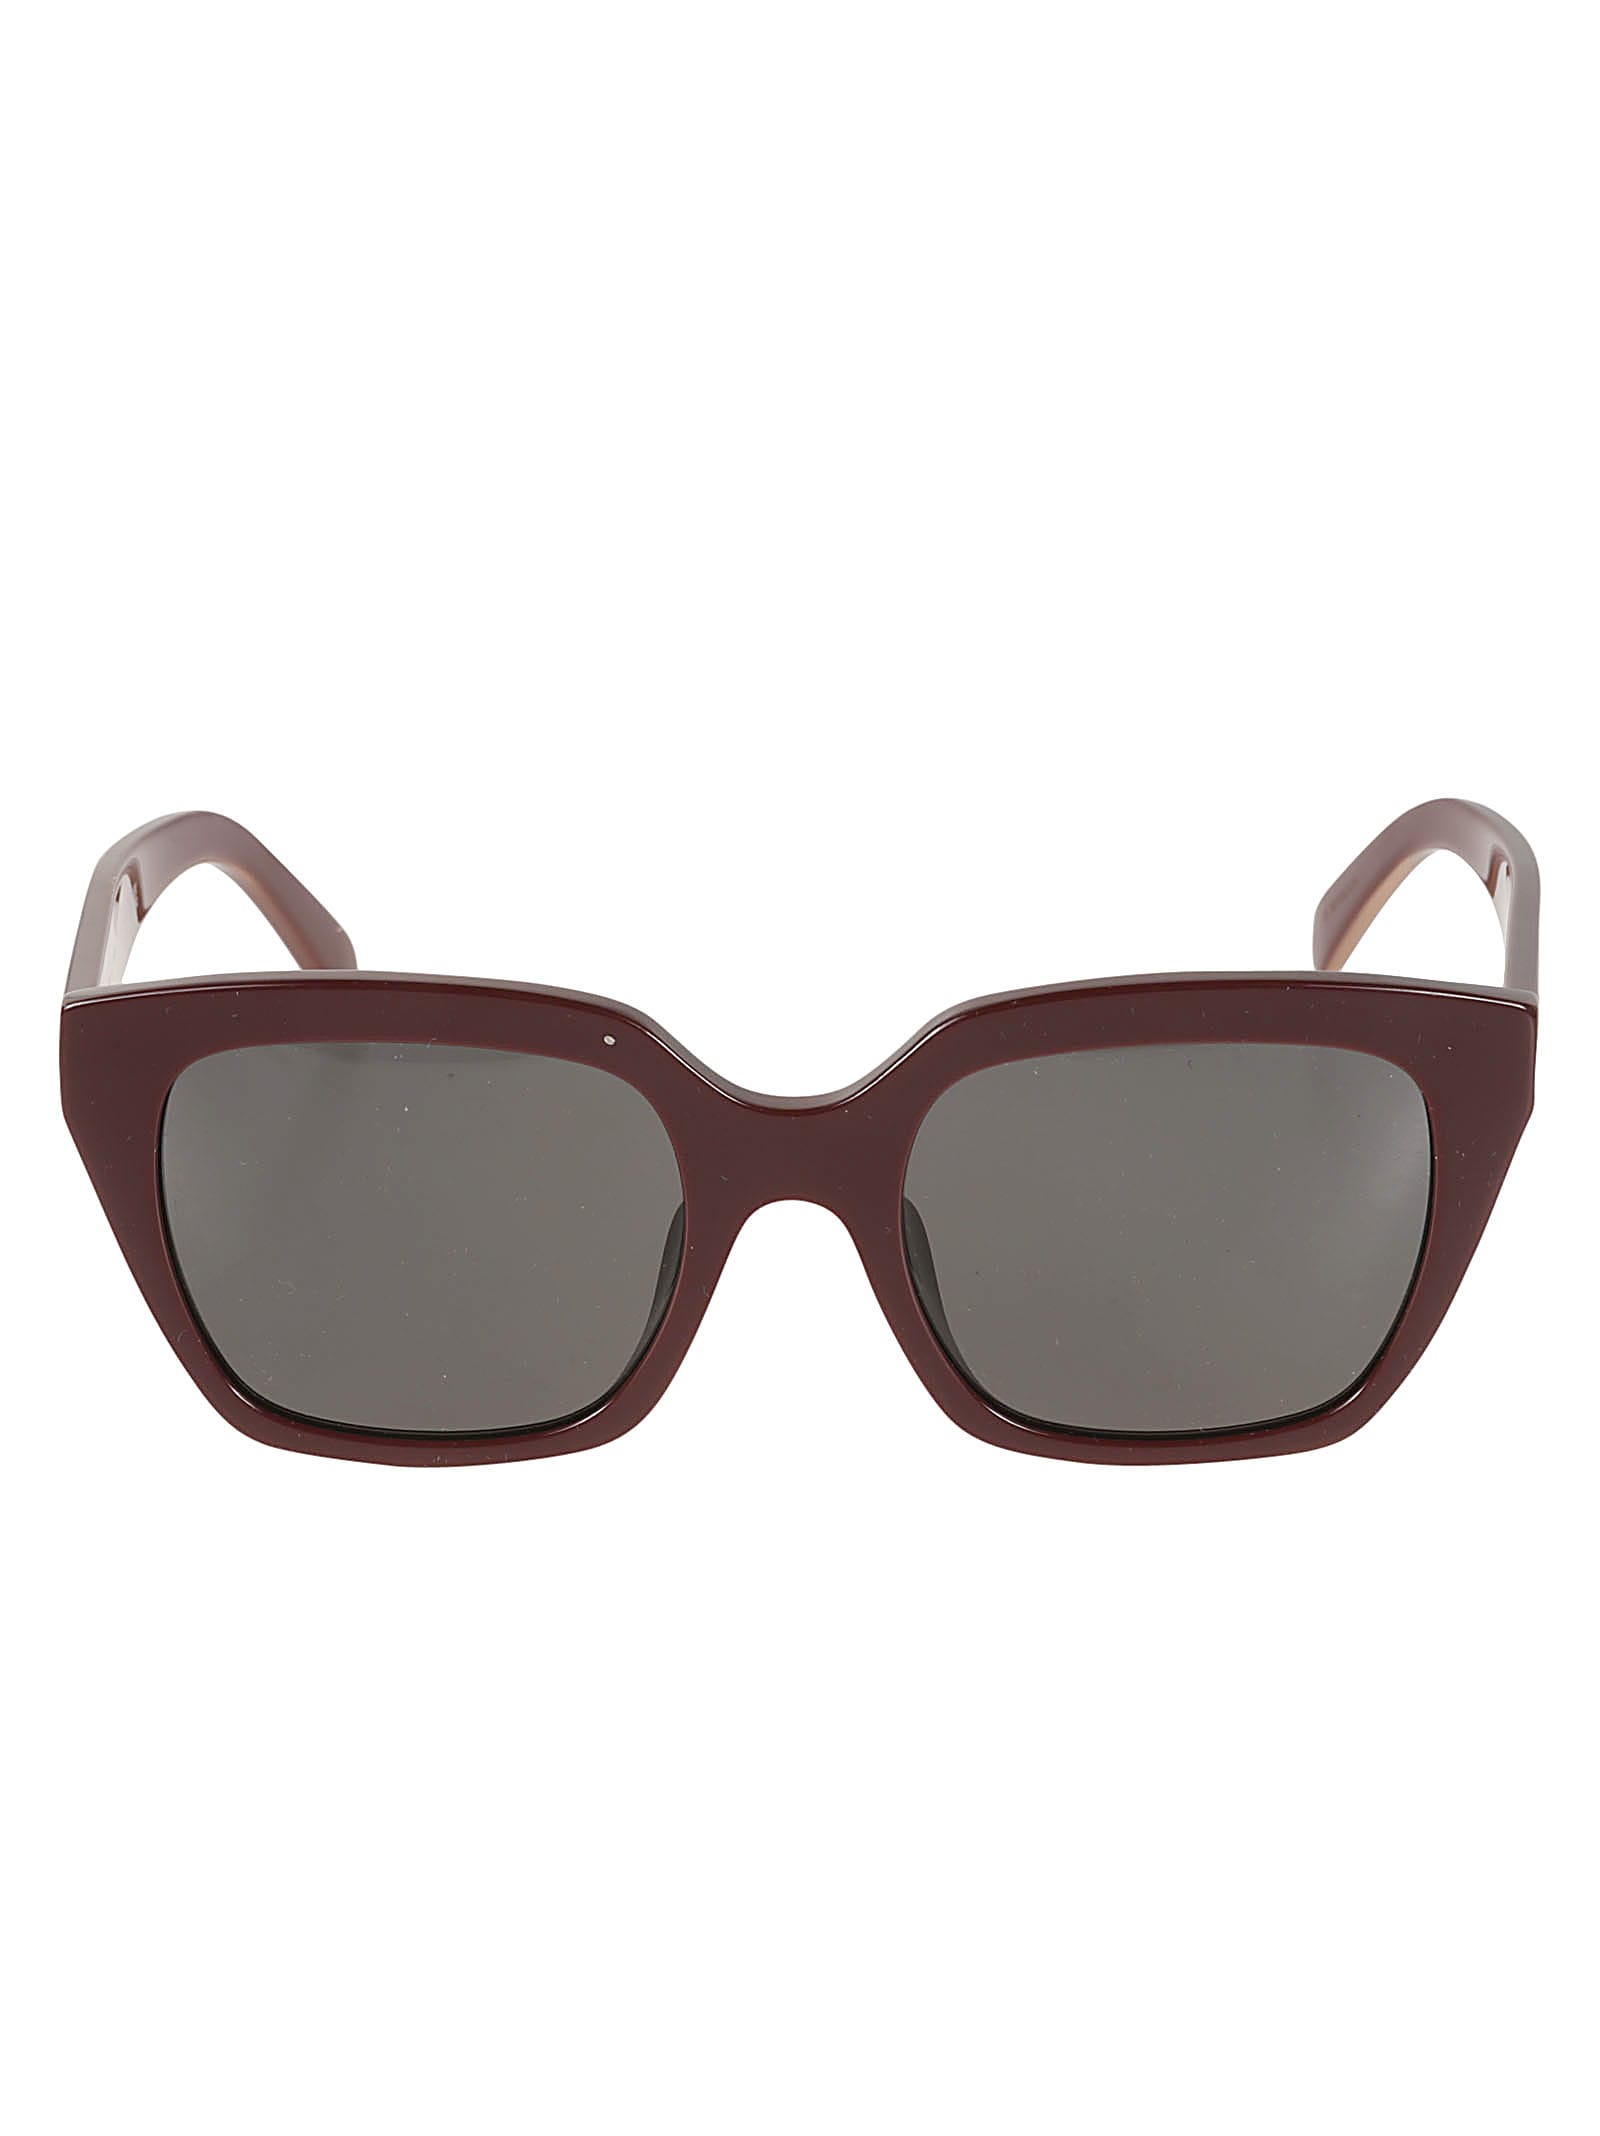 Celine Wayfarer Sunglasses